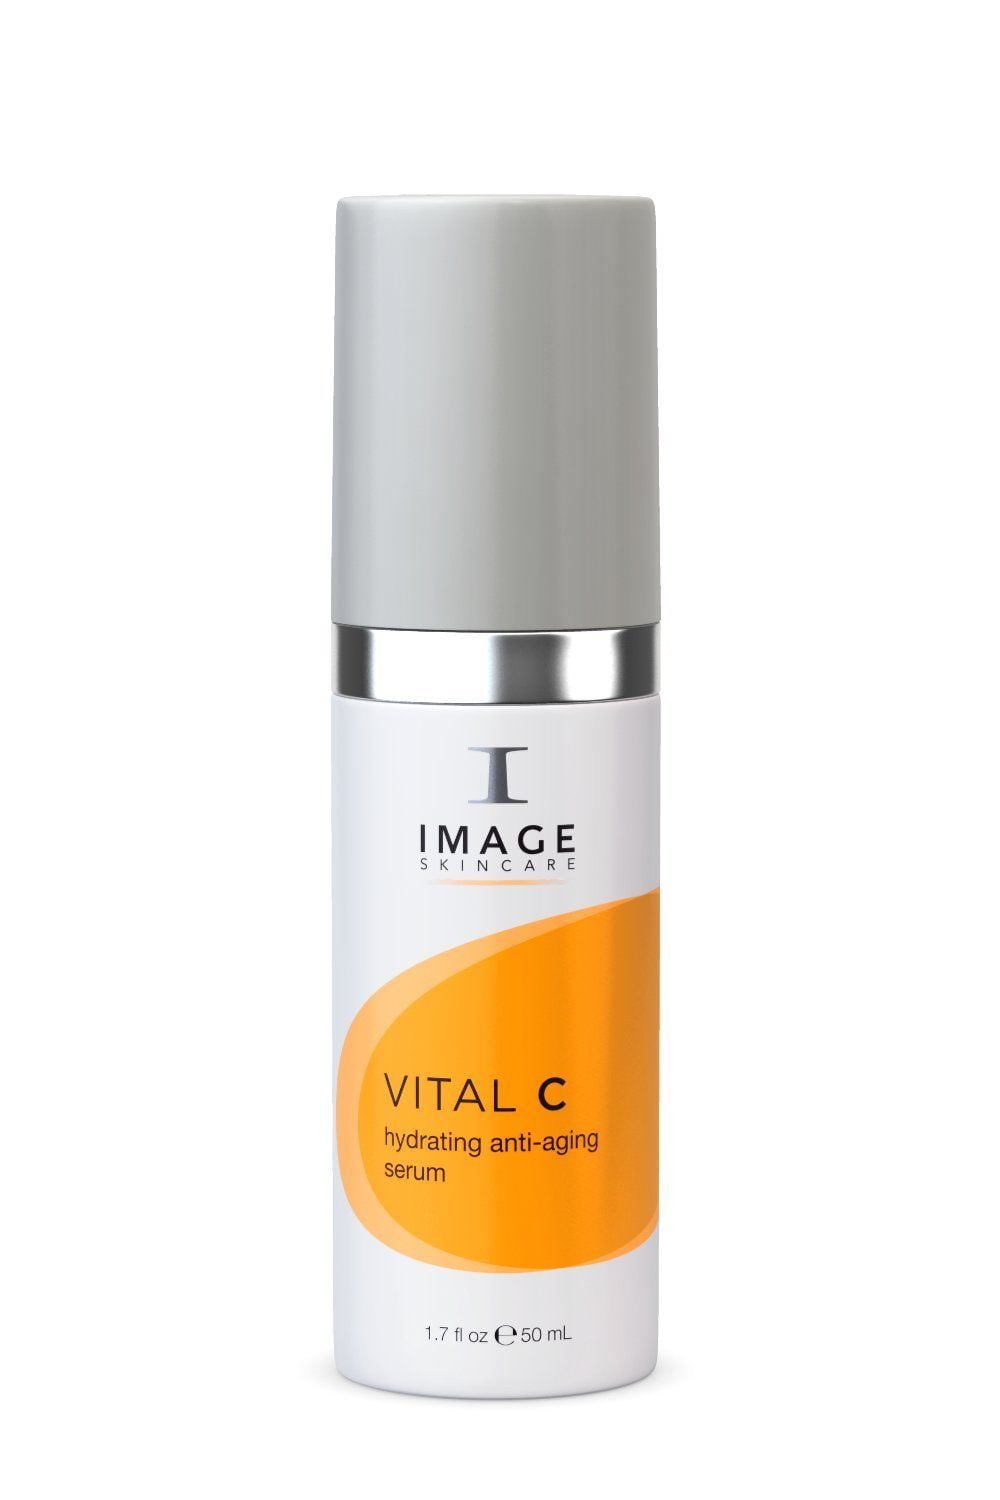 image skincare vital c hydrating anti aging serum ingredients)